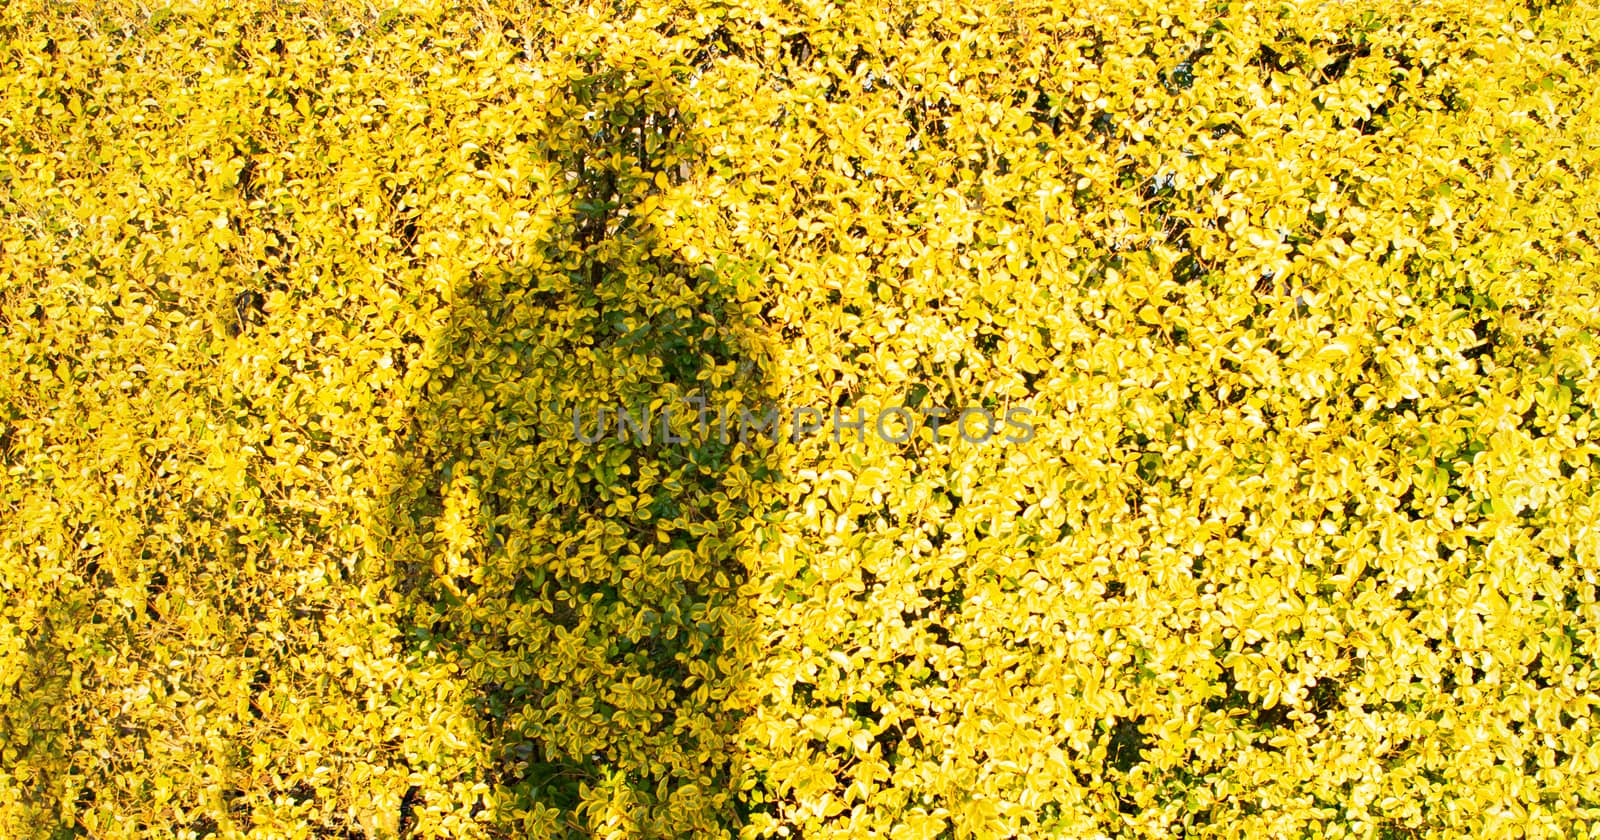 shadow of a woman on yellow flower field. Portrait by PeterHofstetter